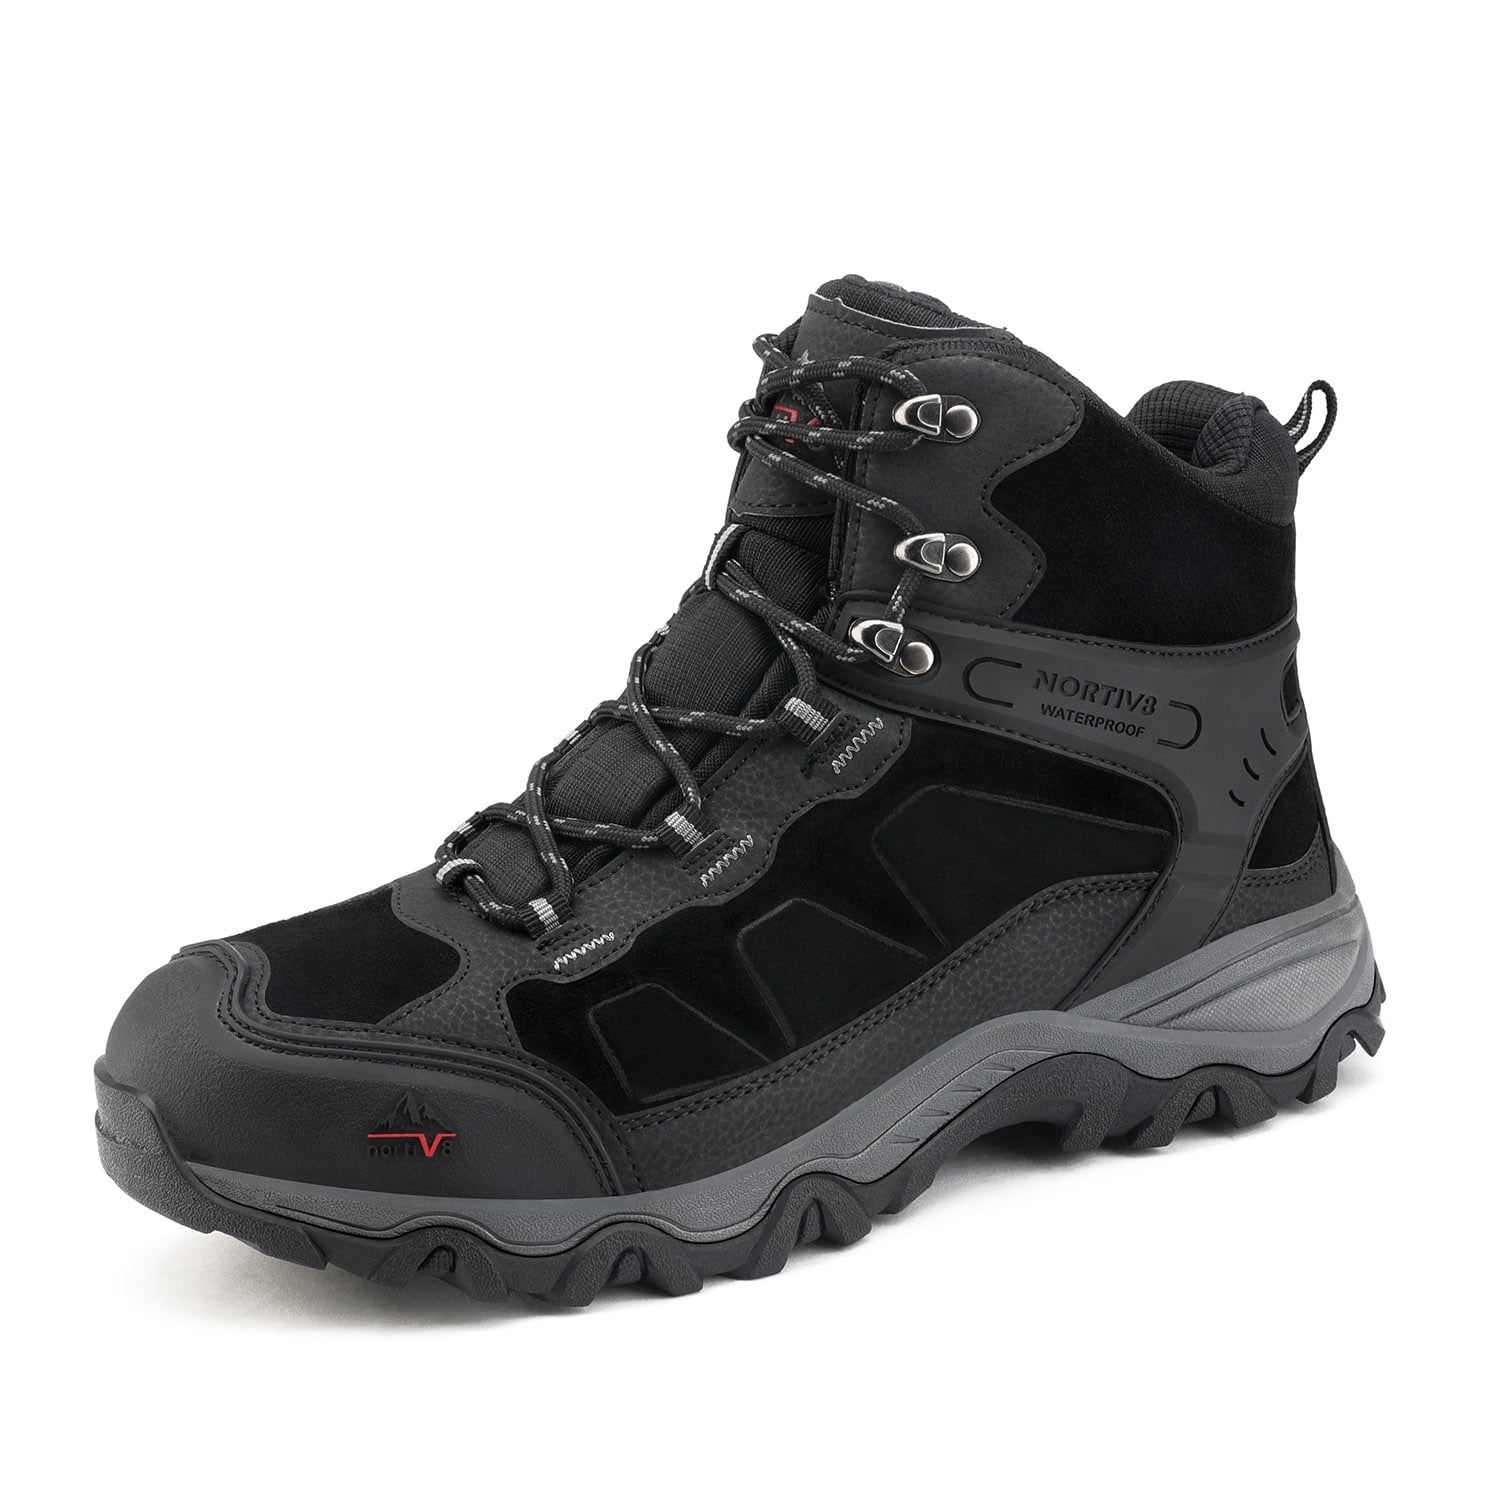 Nortiv8 Mens Hiking Boots Outdoor Waterproof Mid Trekking Backpacking ...